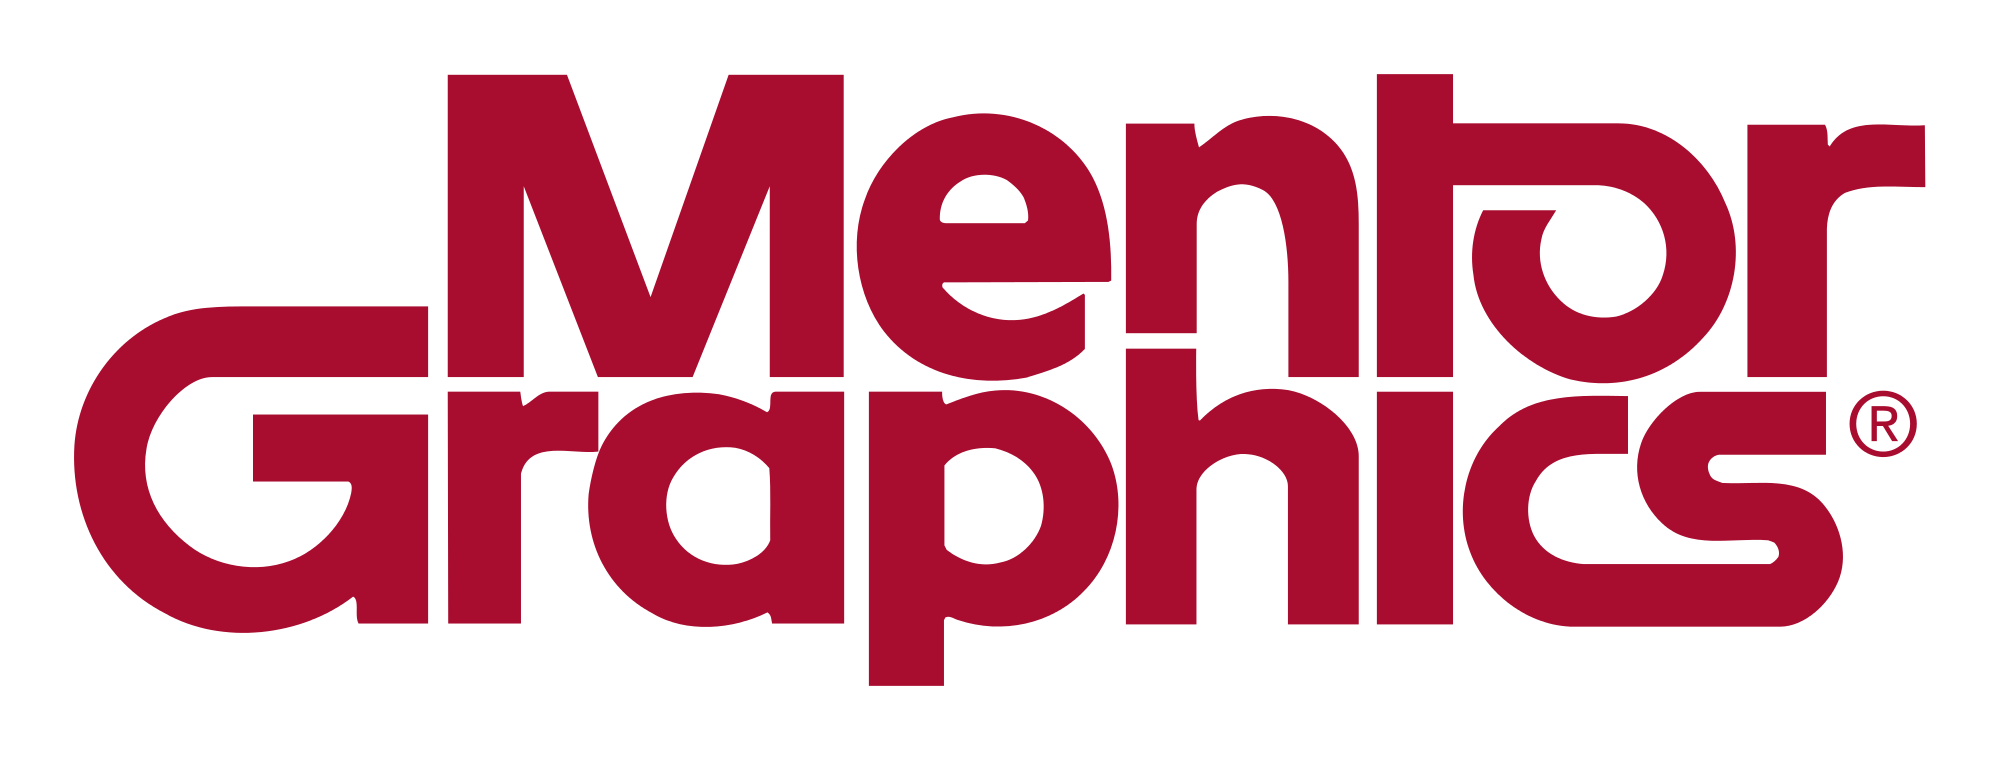 Mentor Graphics Corp. logo